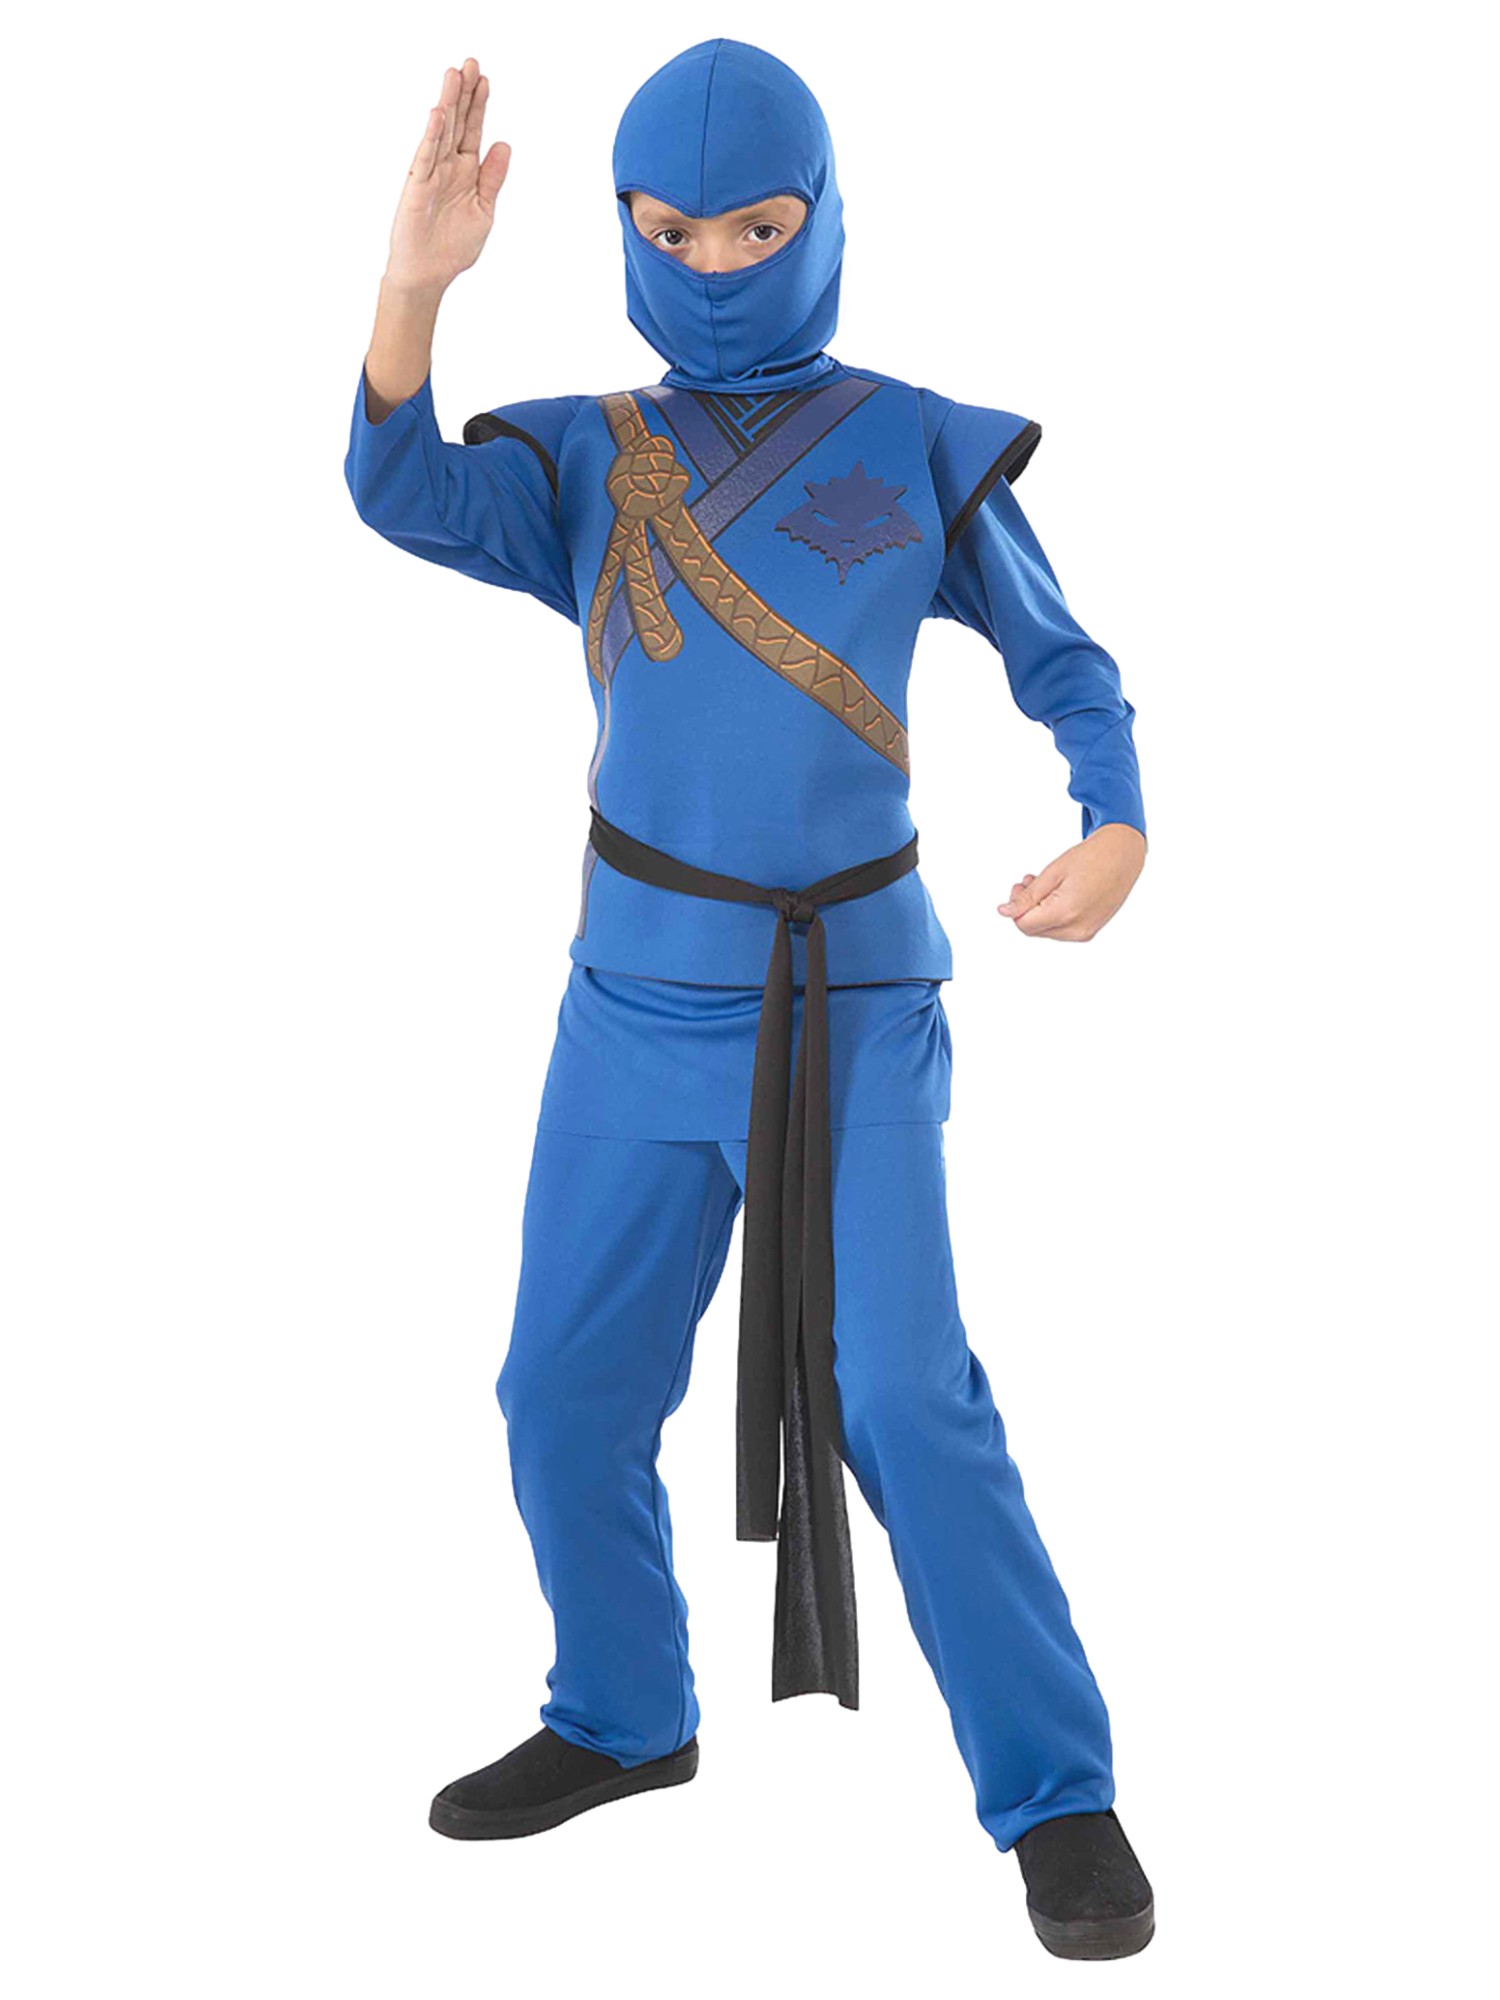 Blue Ninja Child Halloween Costume - image 1 of 1